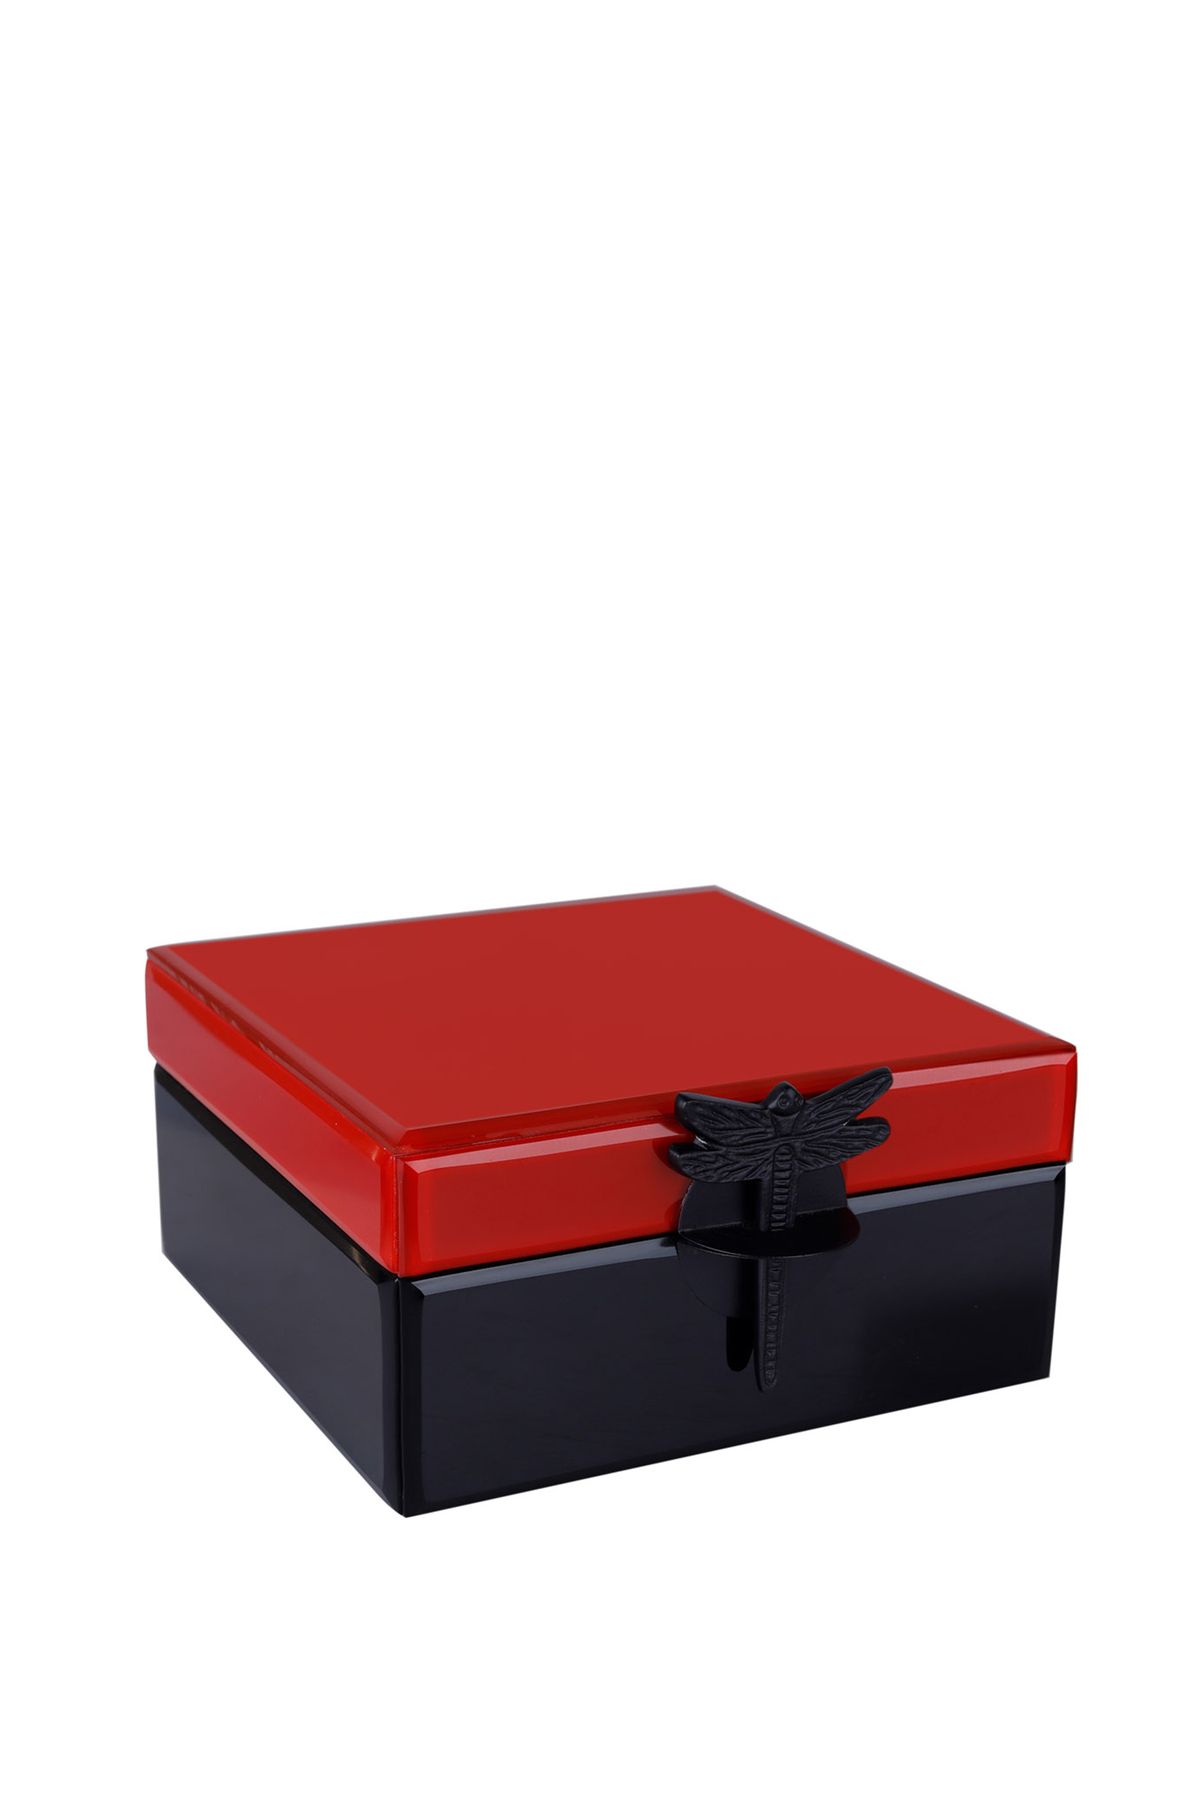 Lucky Art Siyah Kırmızı Dekoratif Kutu 21x21x10 cm